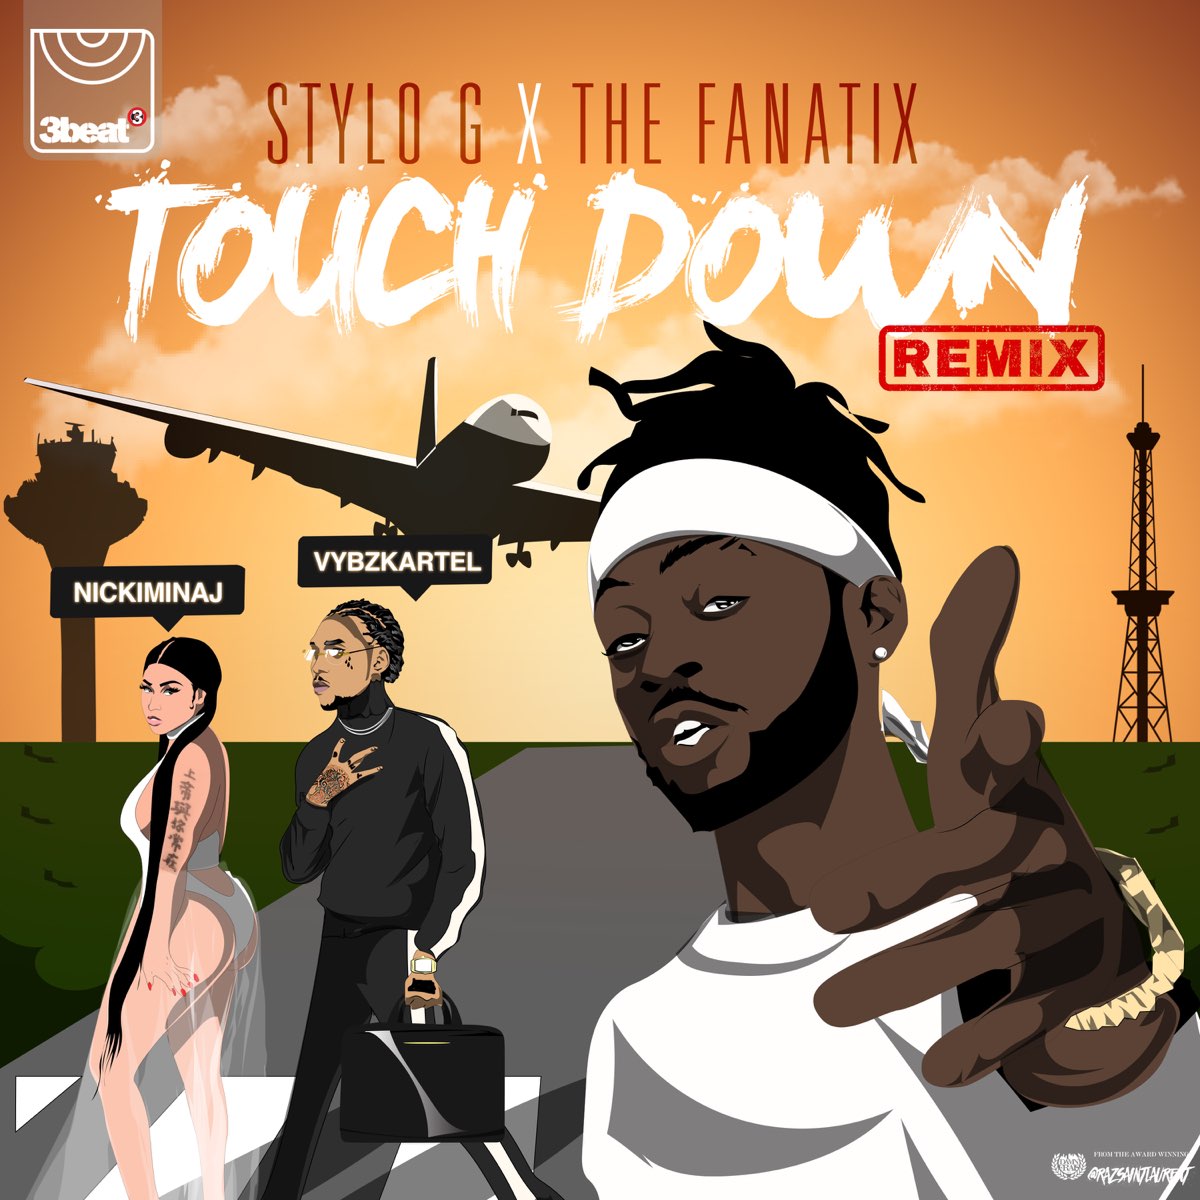 Stylo G & The FaNaTiX featuring Nicki Minaj & Vybz Kartel — Touch Down (Remix) cover artwork